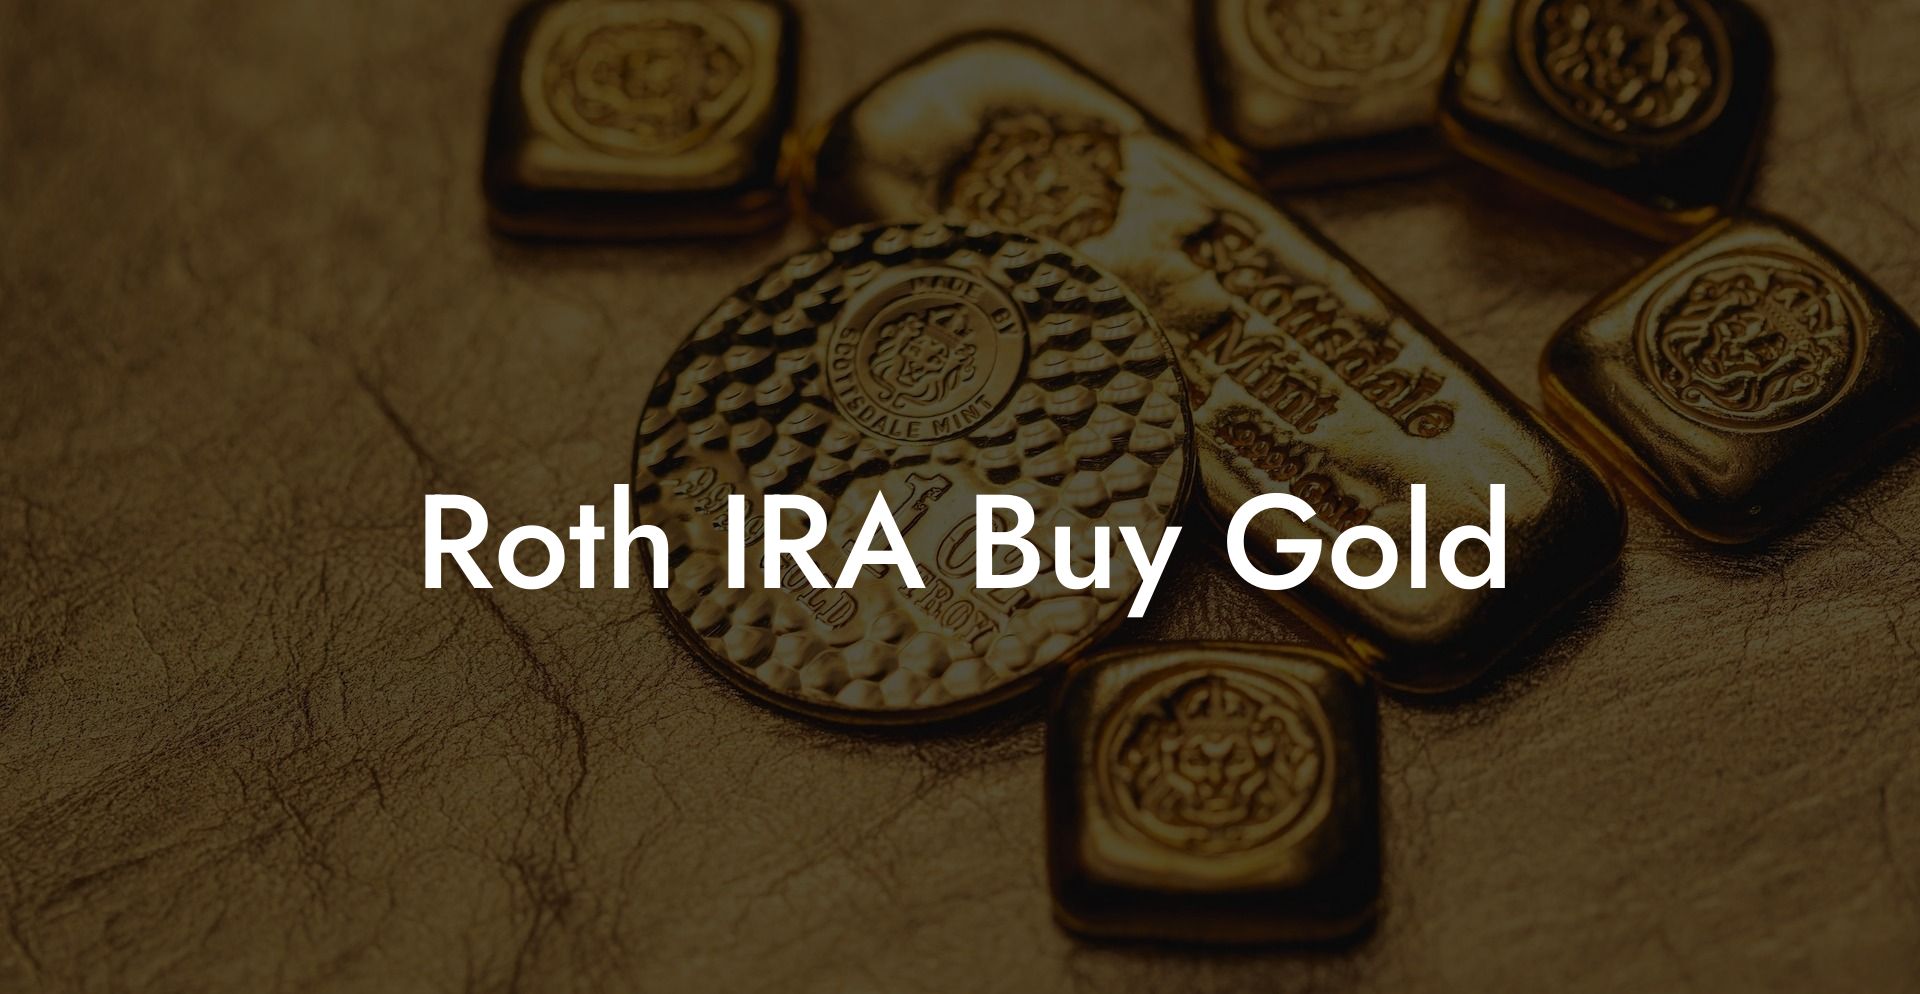 Roth IRA Buy Gold